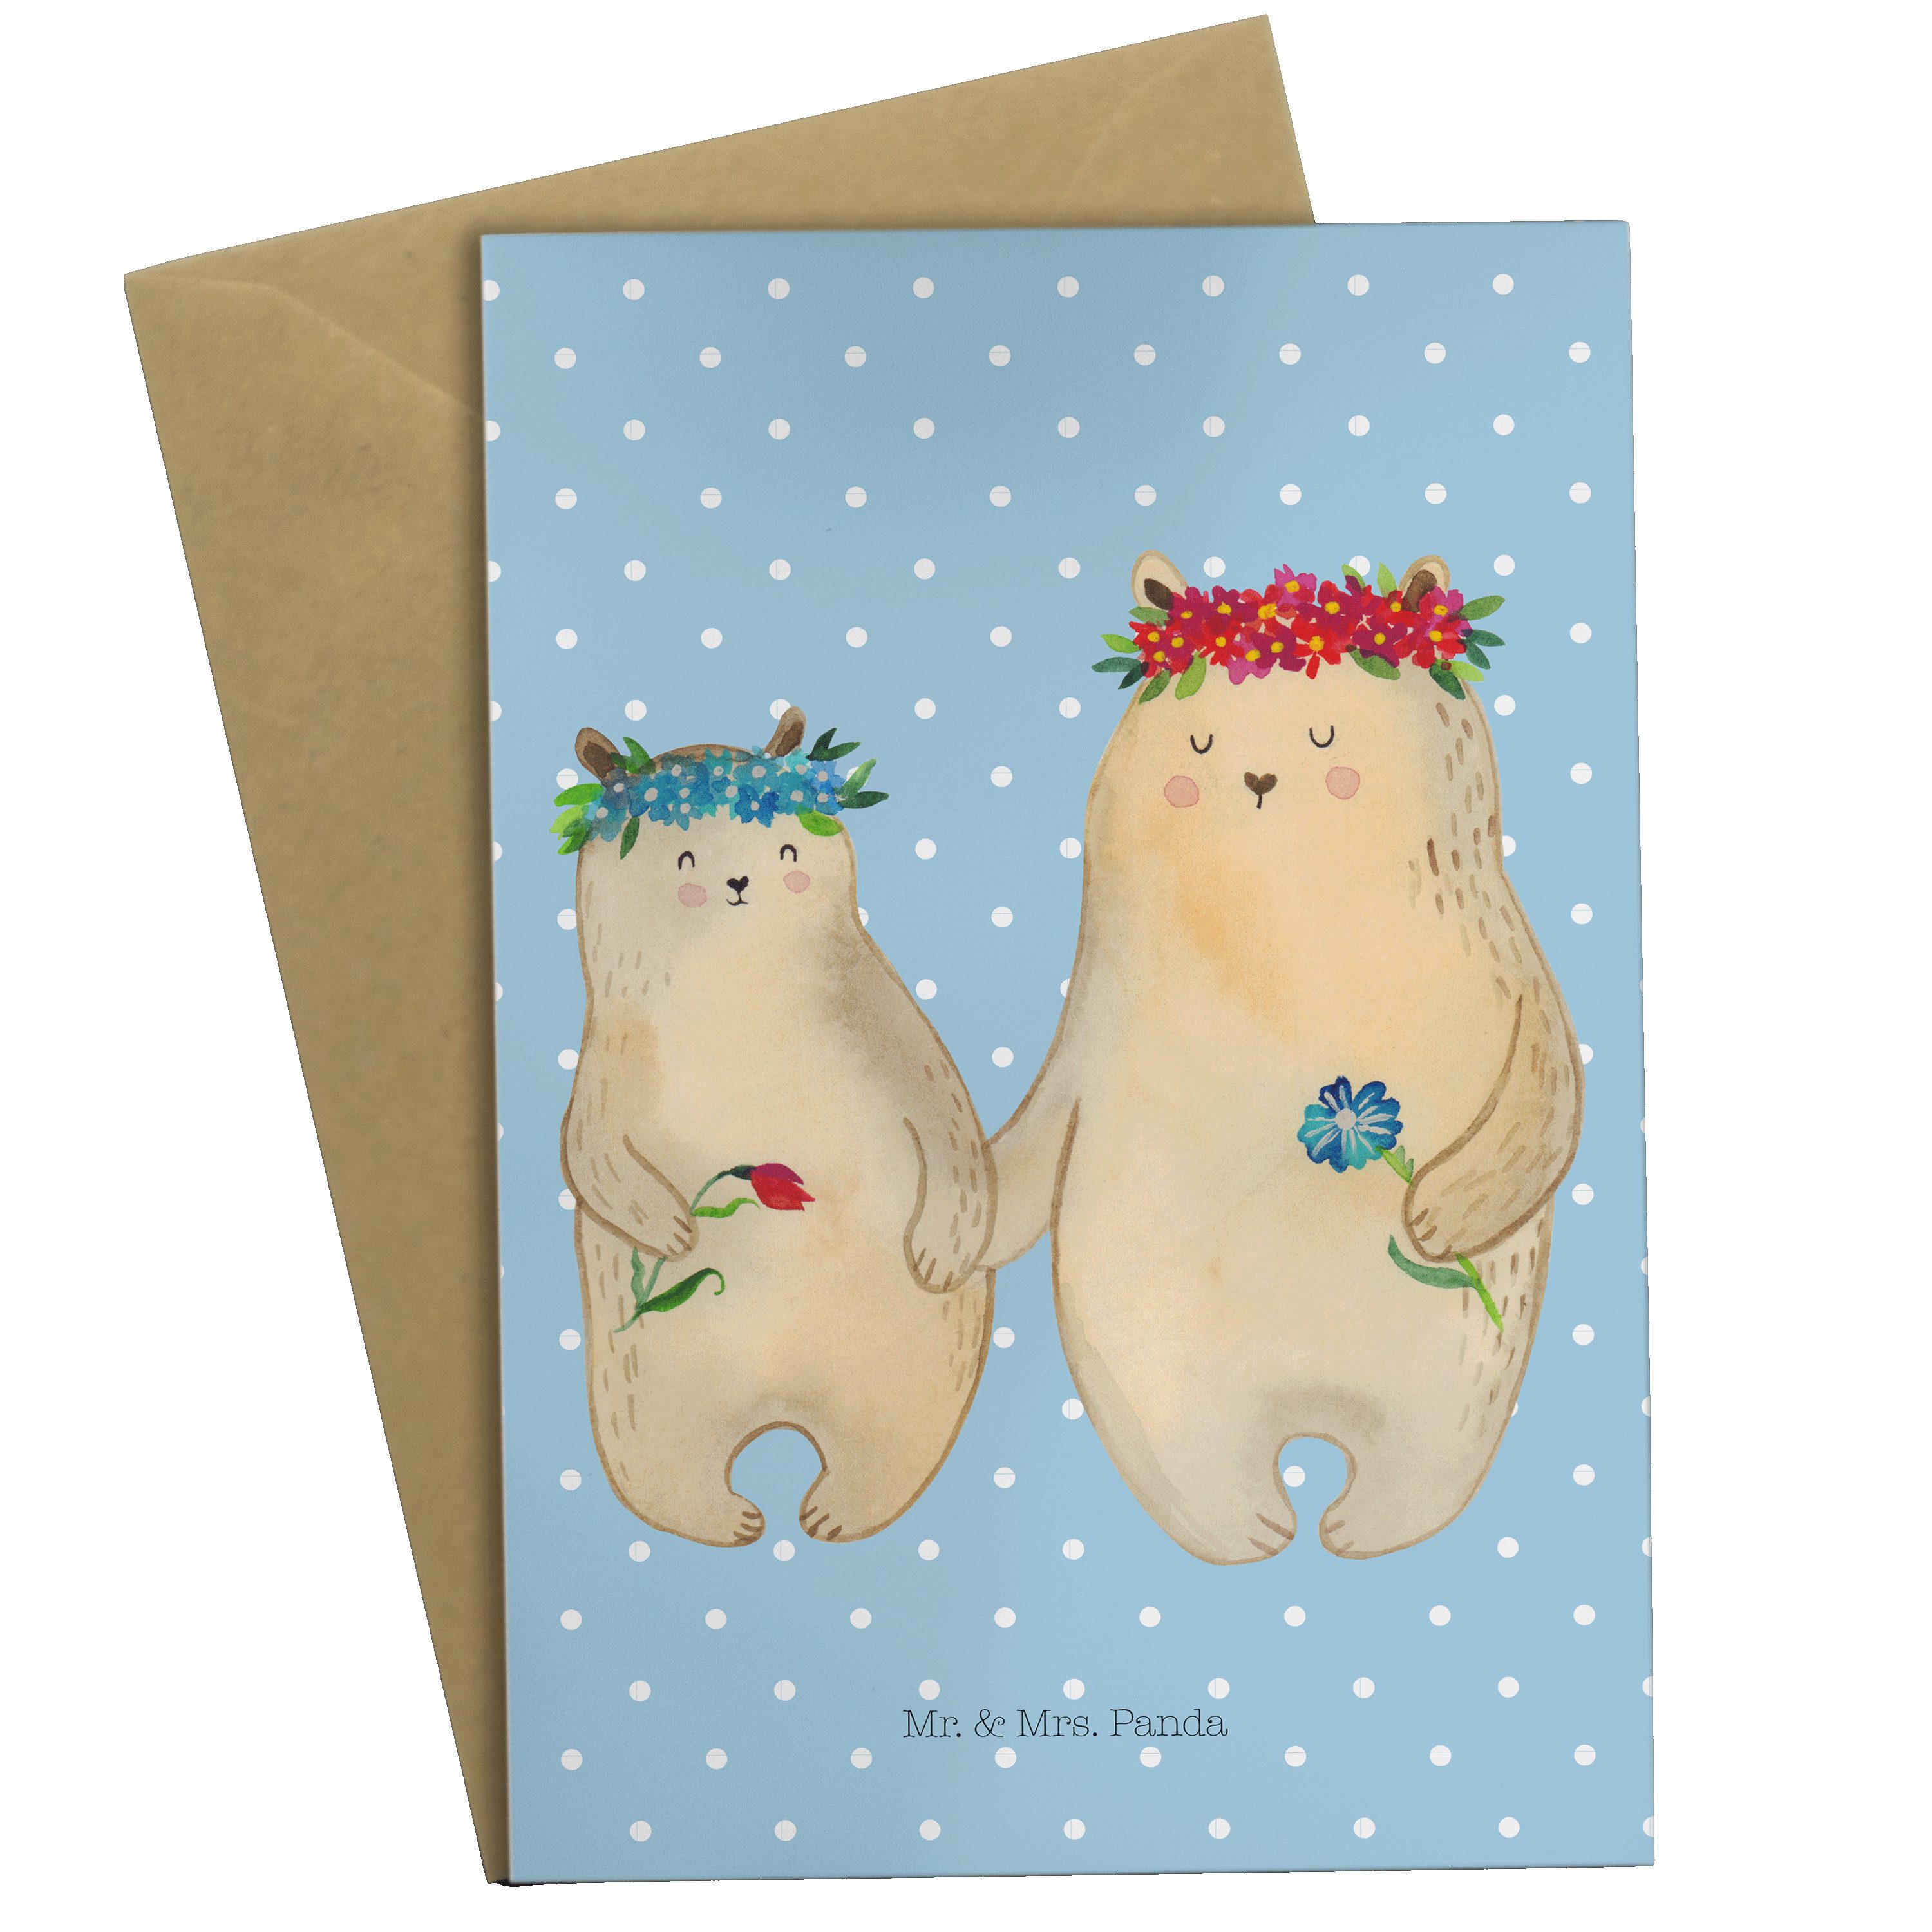 Mr. & Mrs. Panda Grußkarte Bären mit Blumenkranz - Blau Pastell - Geschenk, Lieblingsmensch, Vat